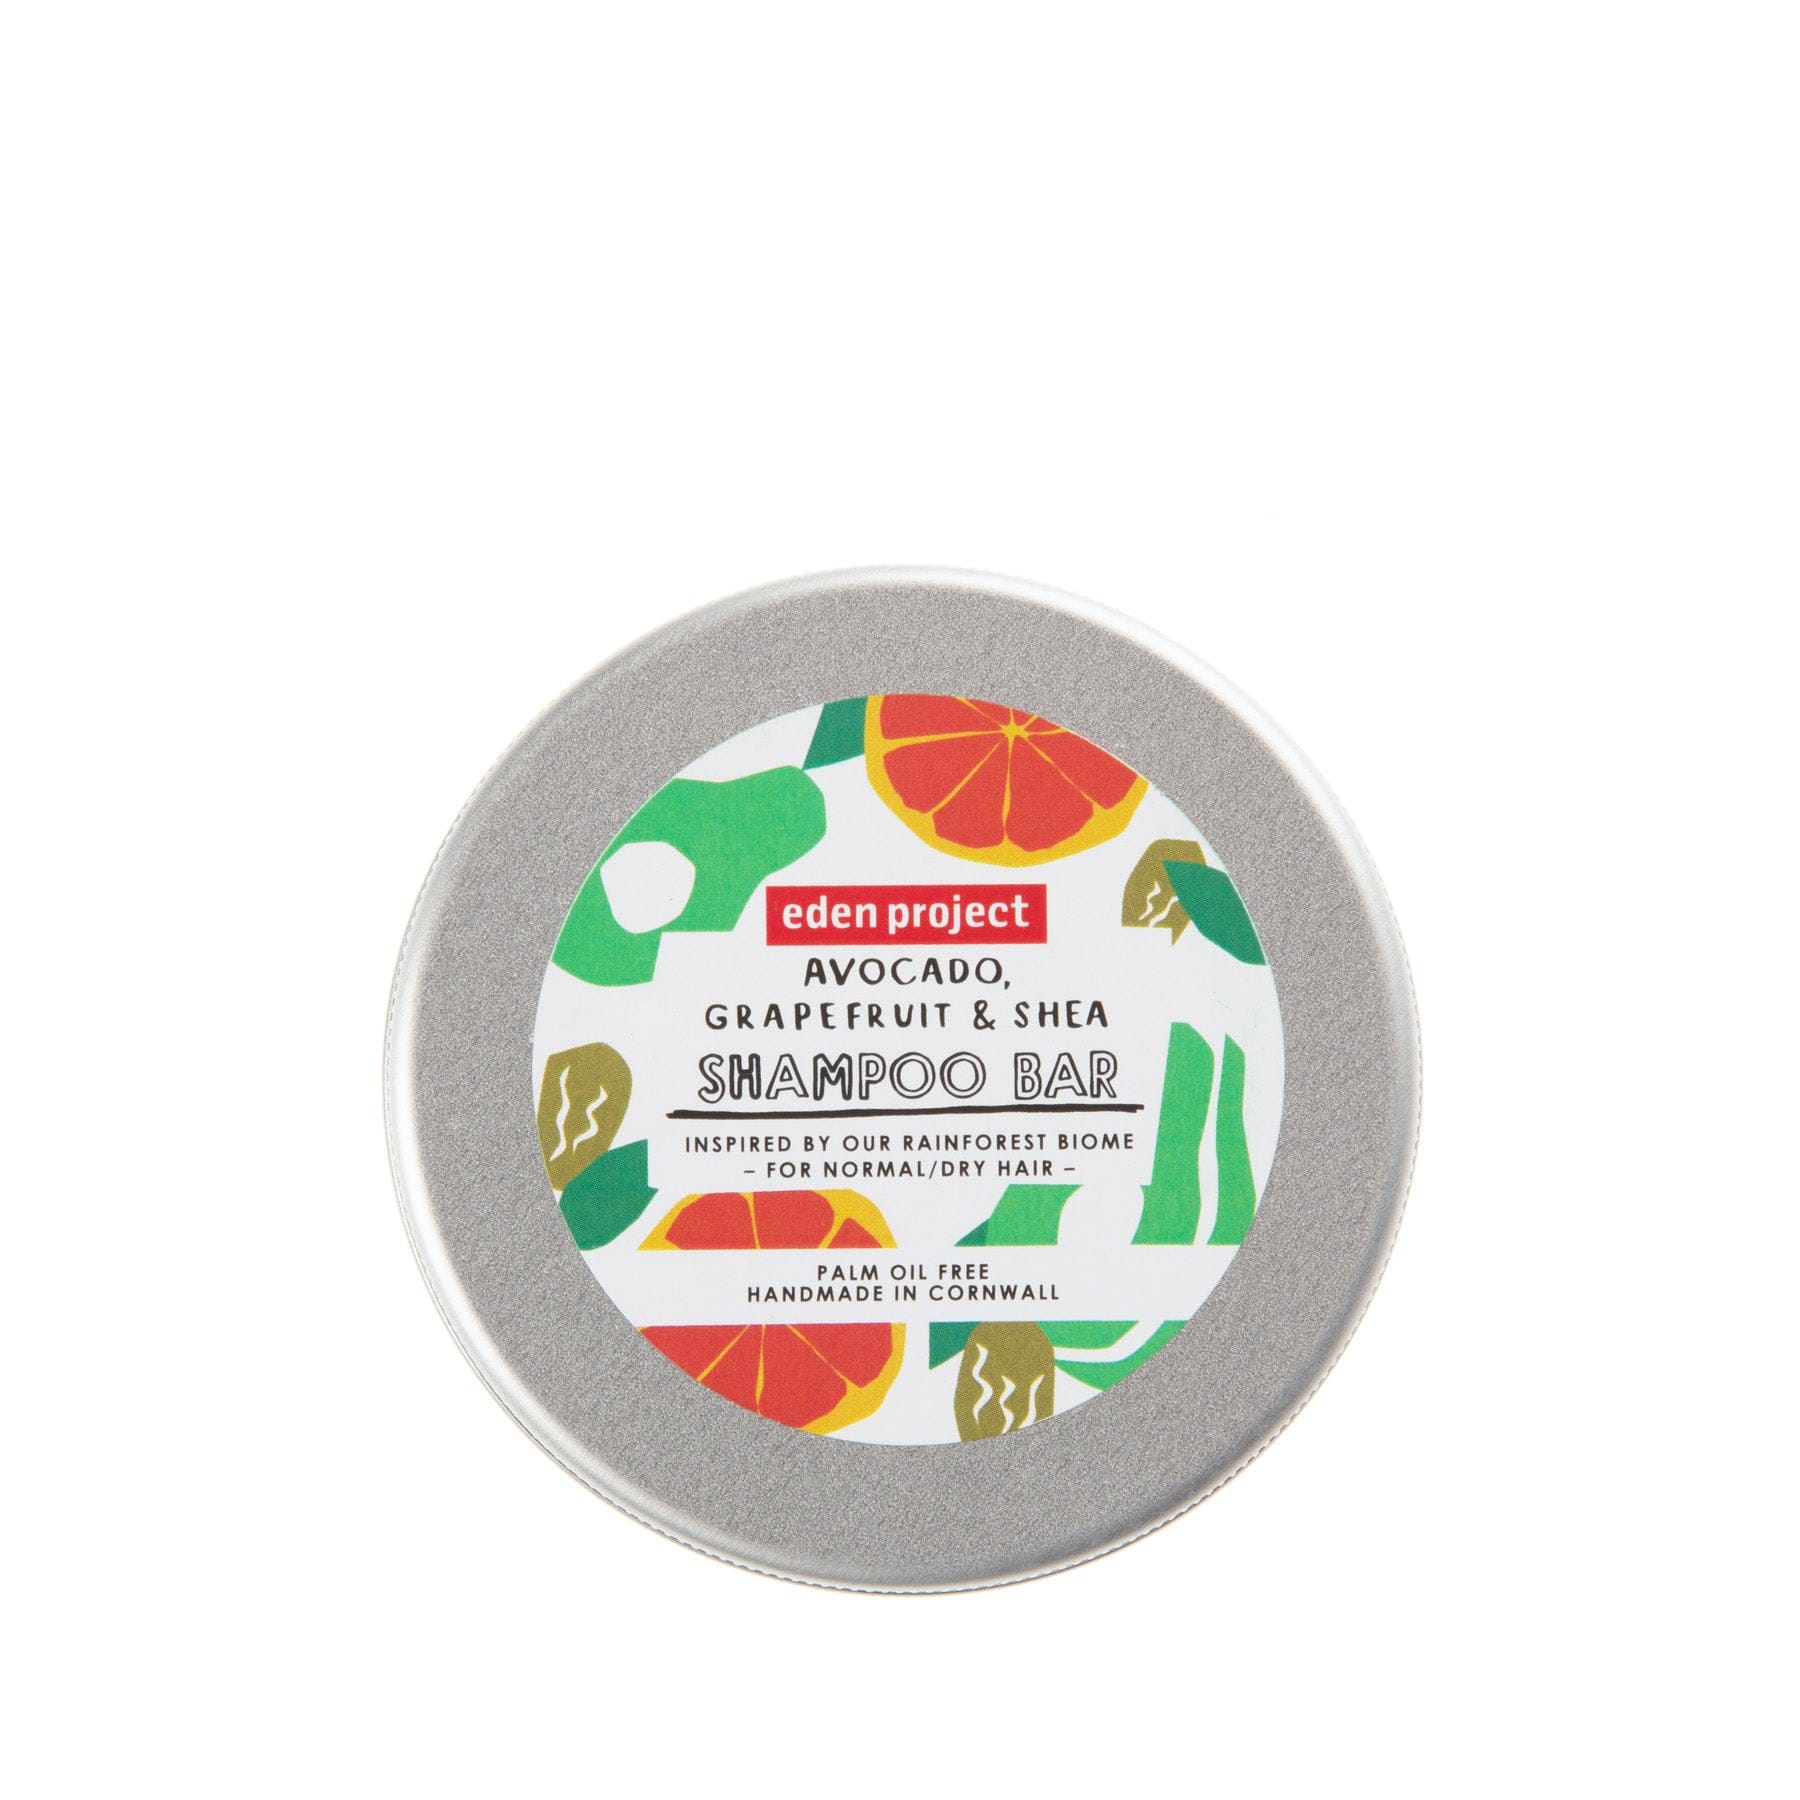 Avocado, grapefruit & shea shampoo bar in a tin